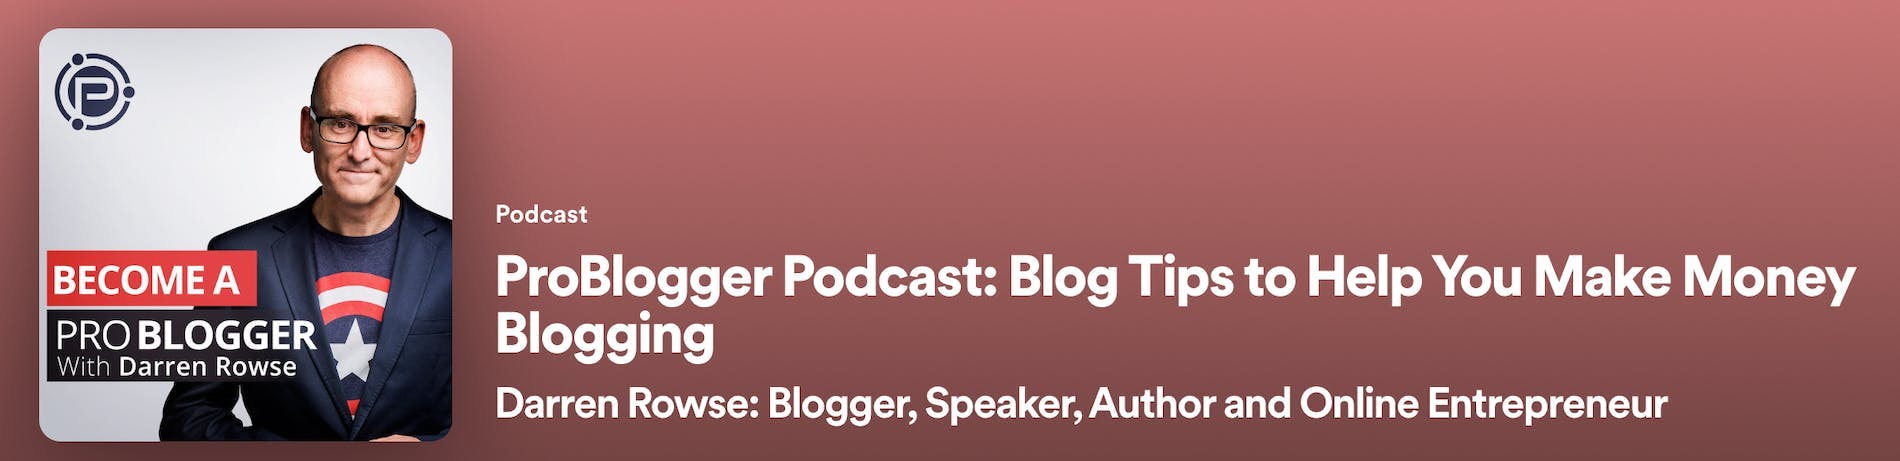 Podcast ProBlogger